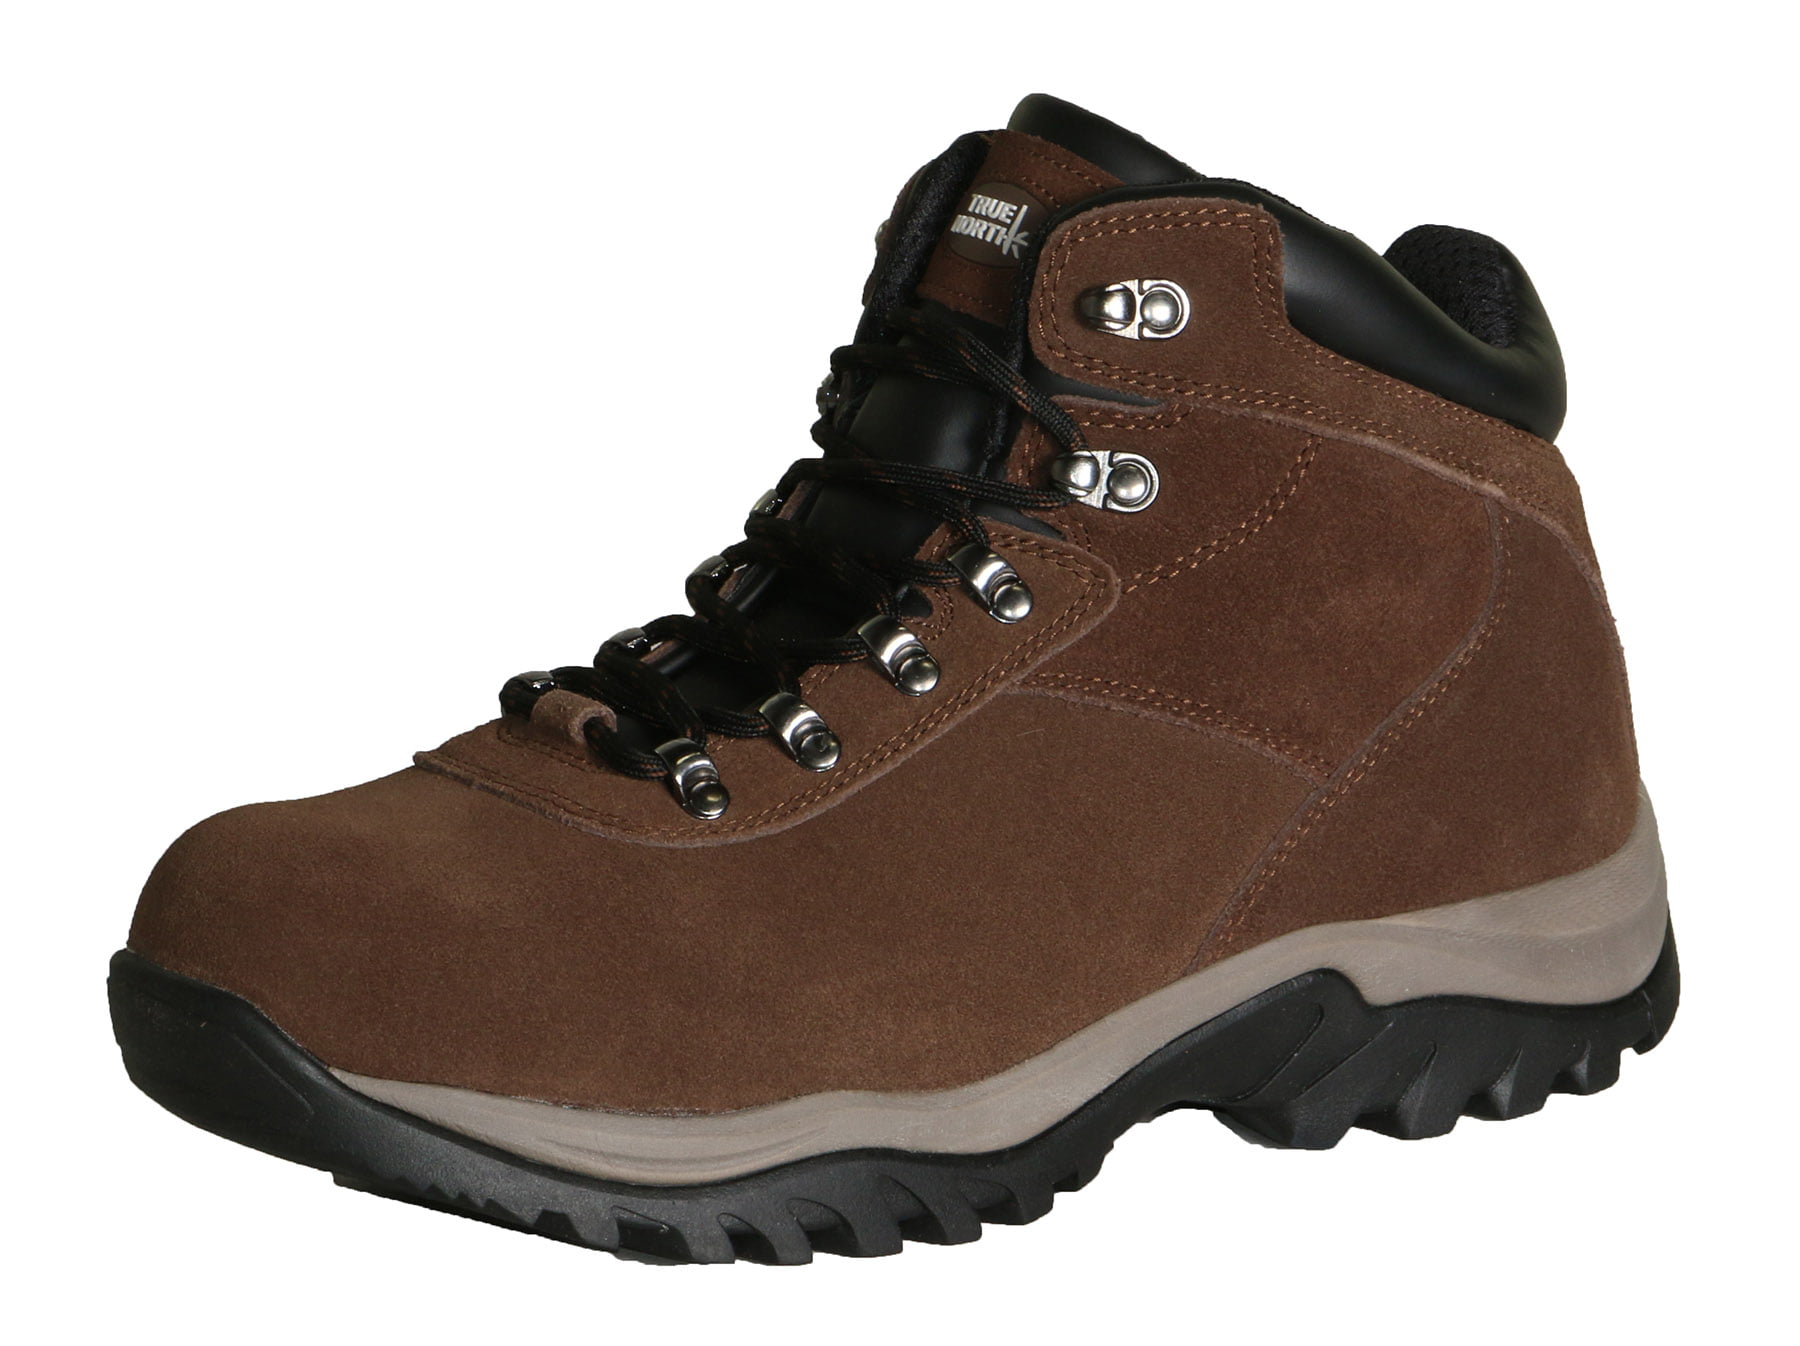 True North Men's Stowe Mid Hiking Boots-Brown/Black